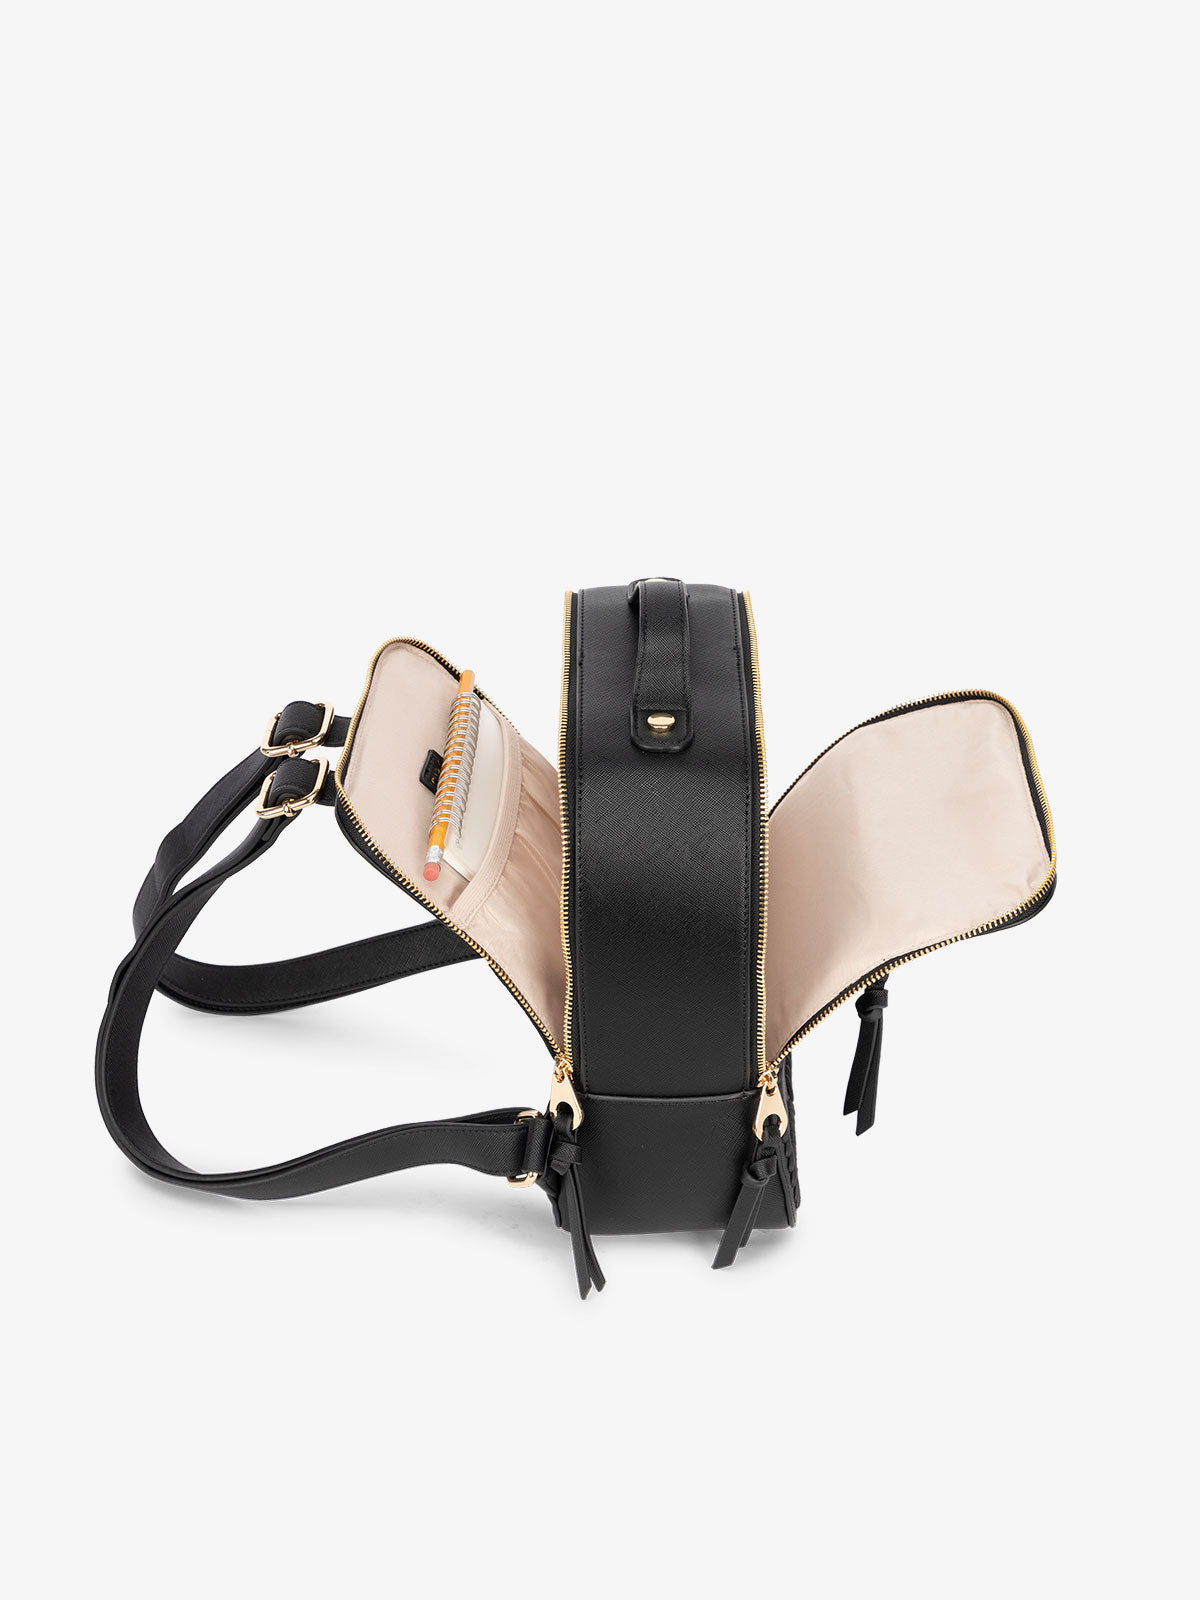 CALPAK mini backpack zippered compartments for organizing belongings in black